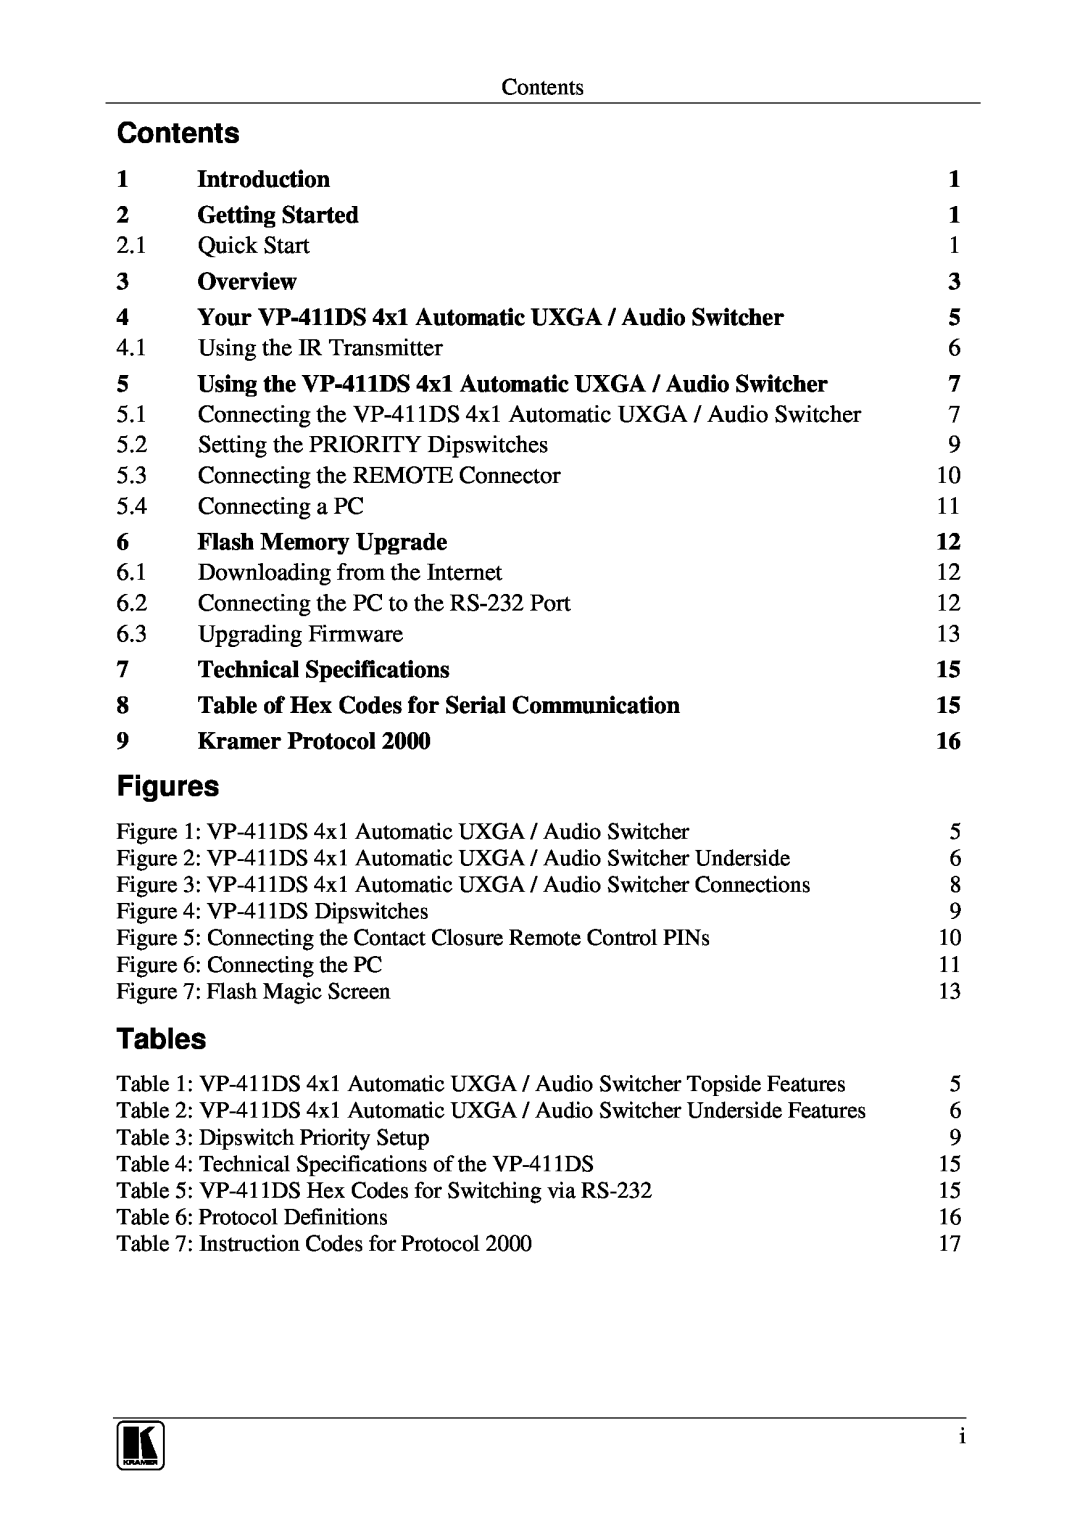 Kramer Electronics VP-411DS user manual Contents, Figures, Tables 